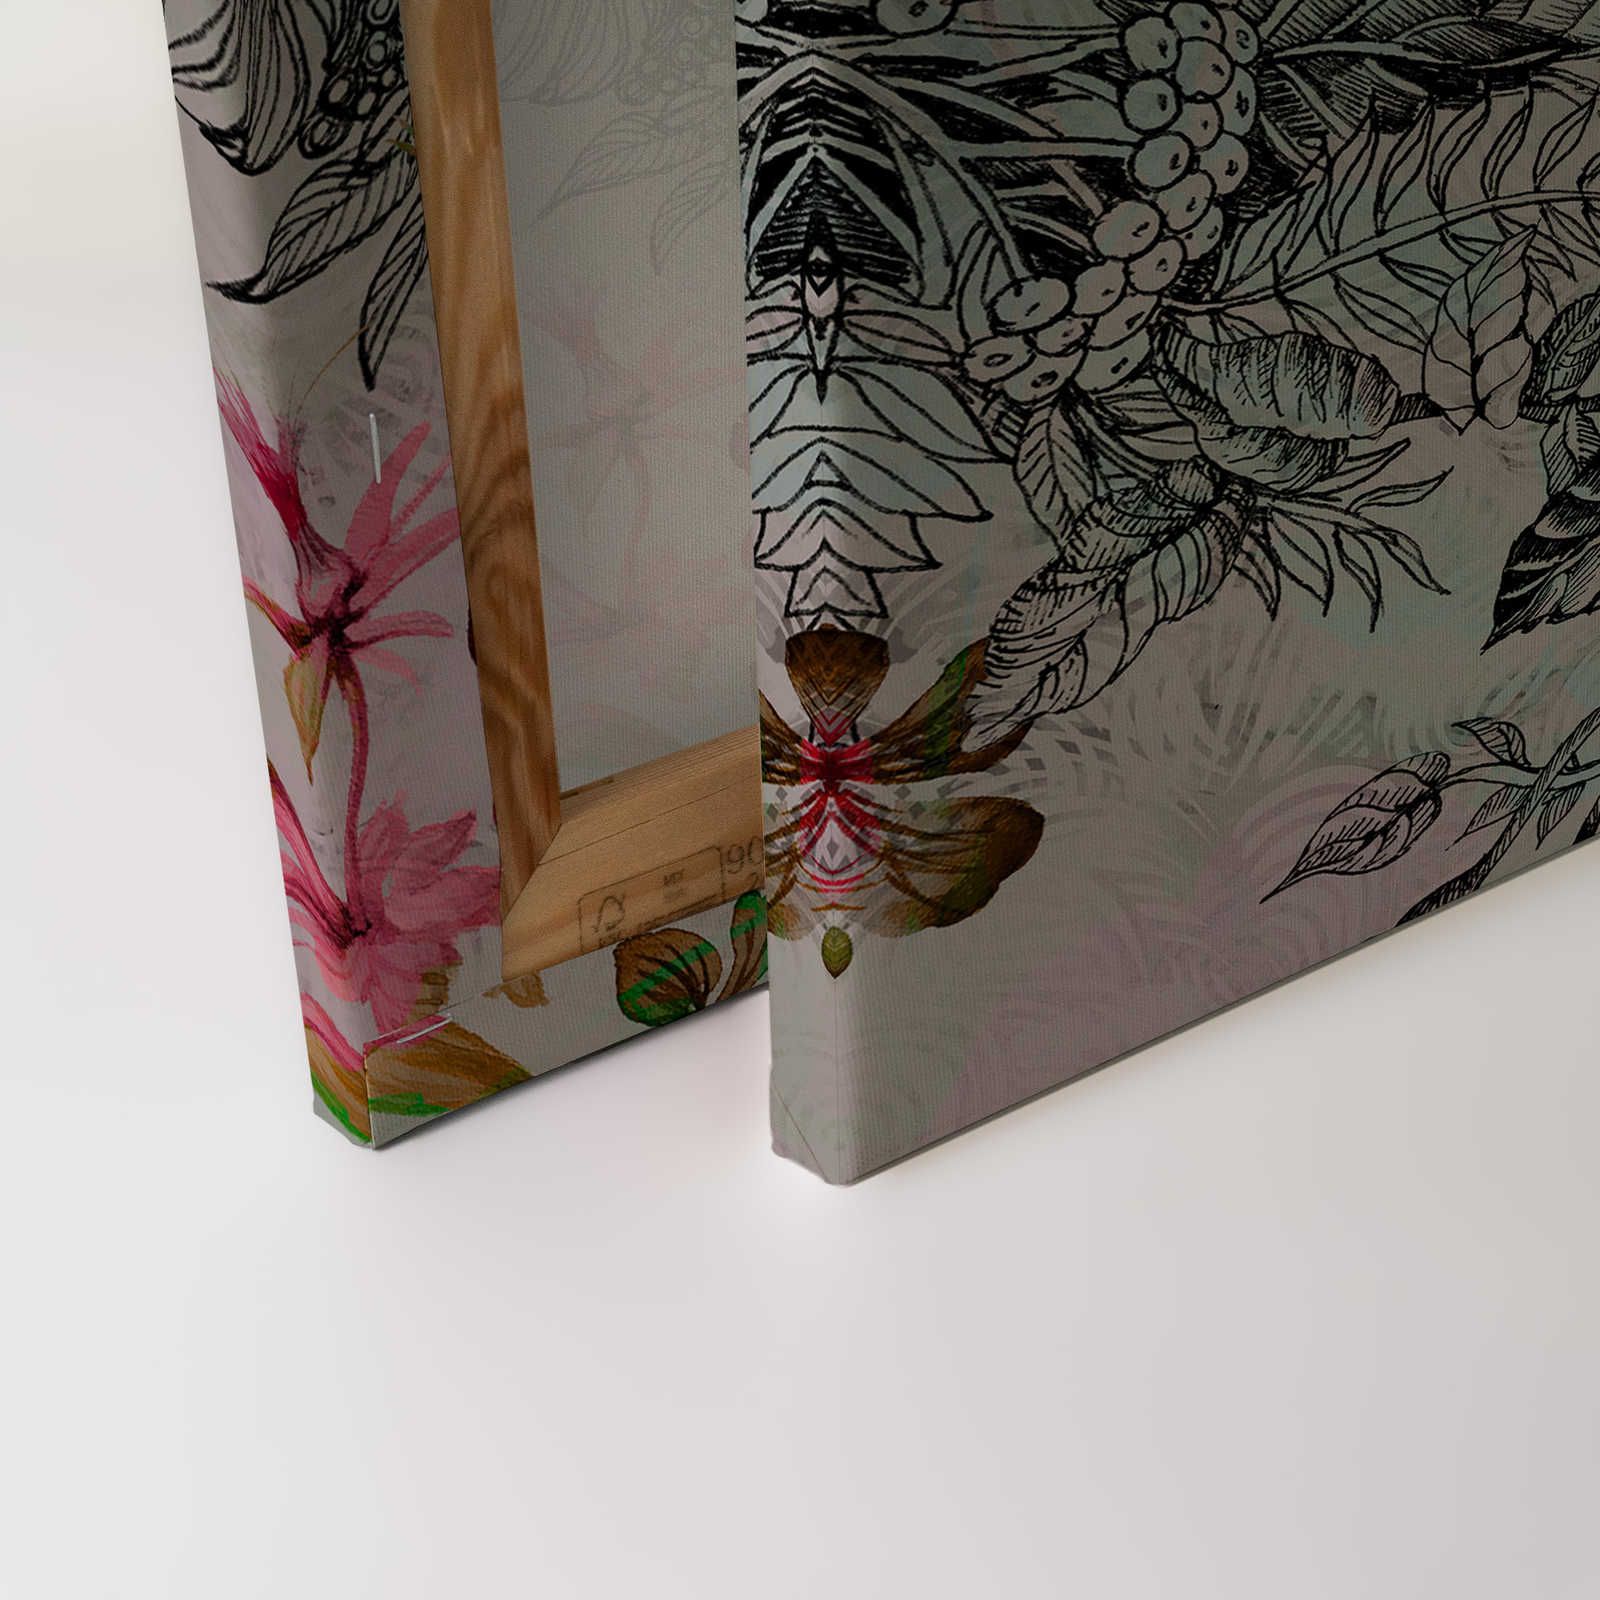             Leinwandbild Vögel & Blumen im Collage Stil – 1,20 m x 0,80 m
        